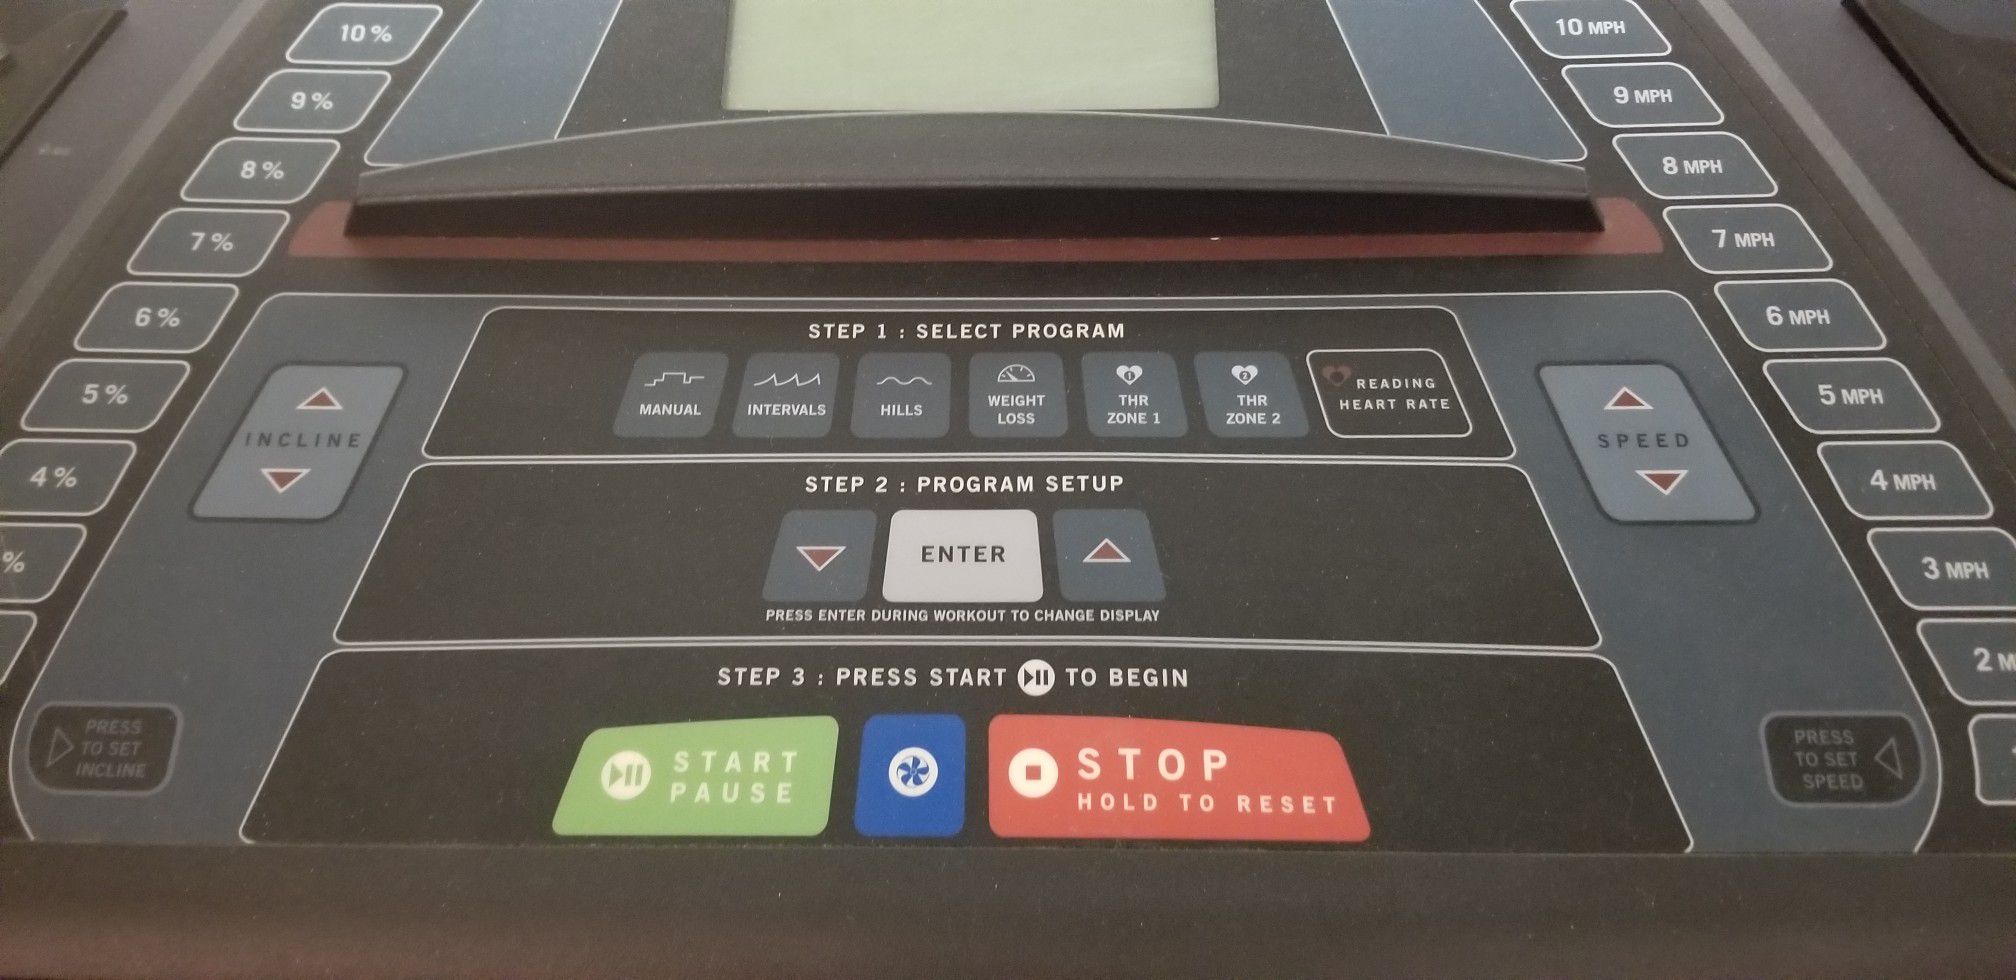 Exercise Equipment treadmill